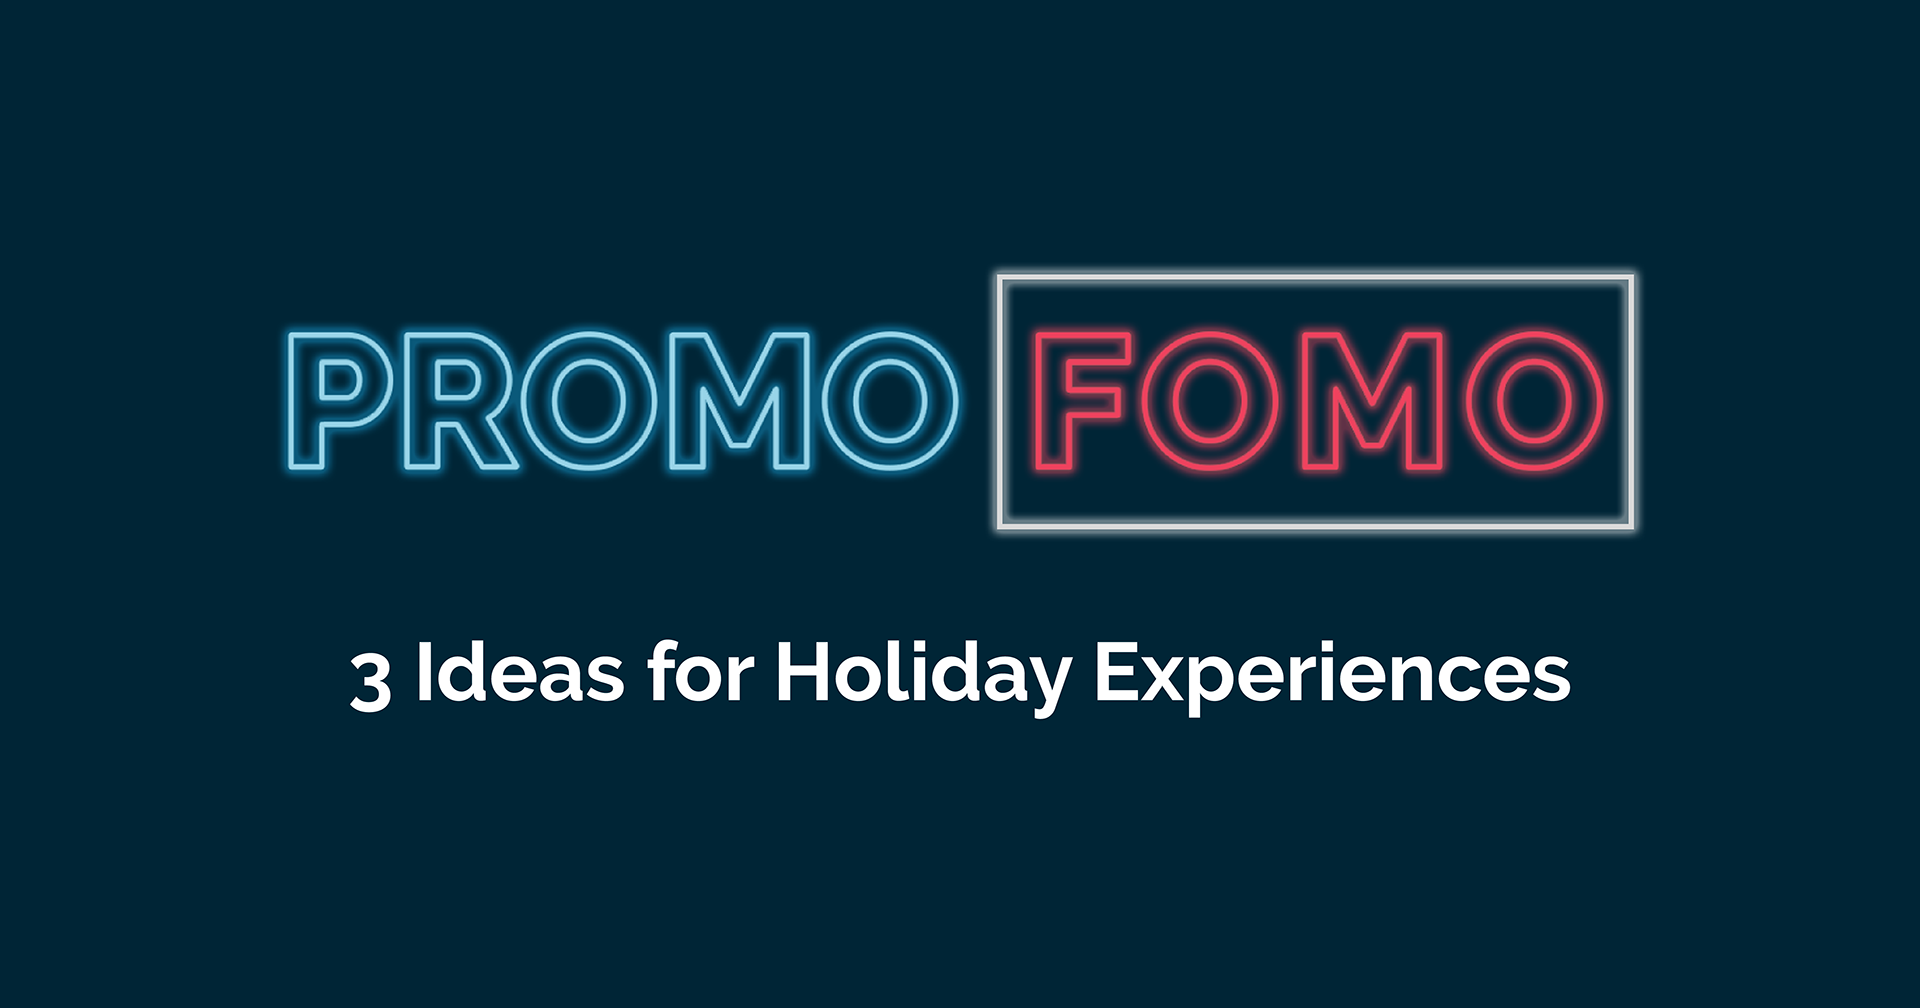 Promo FOMO 3 Ideas for Holiday Experiences